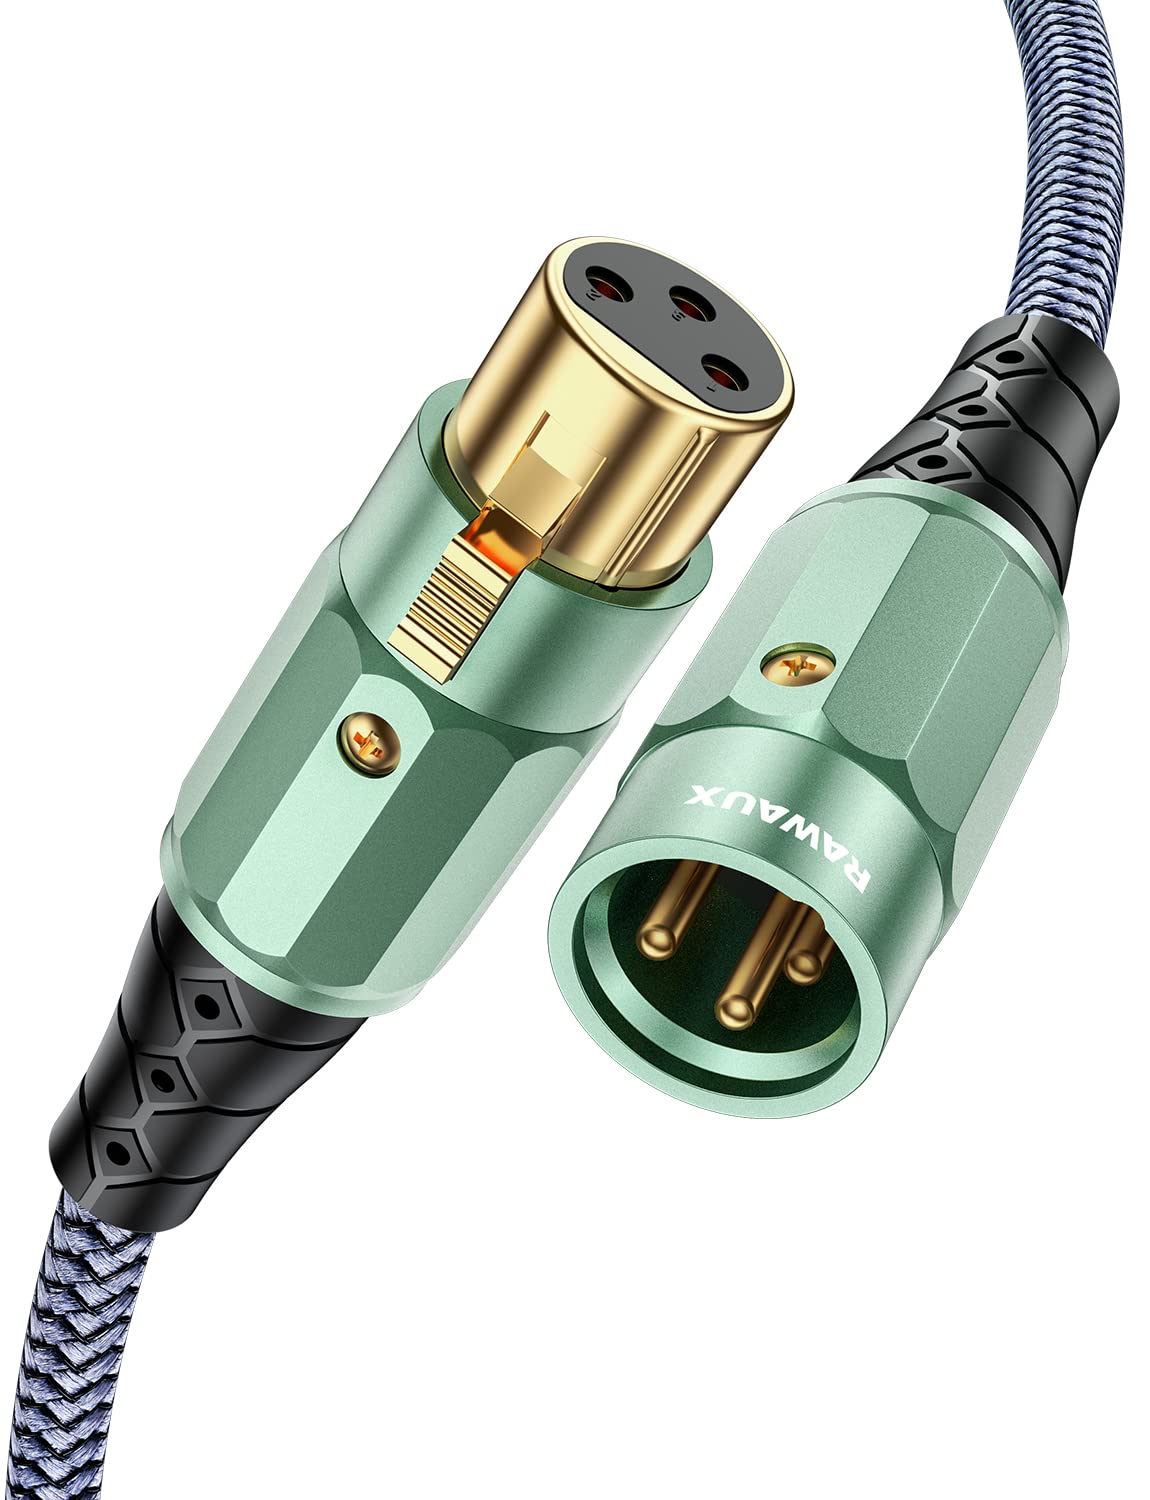 RAWAUX XLR to XLR Microphone Cable Premium XLR Male to [...]